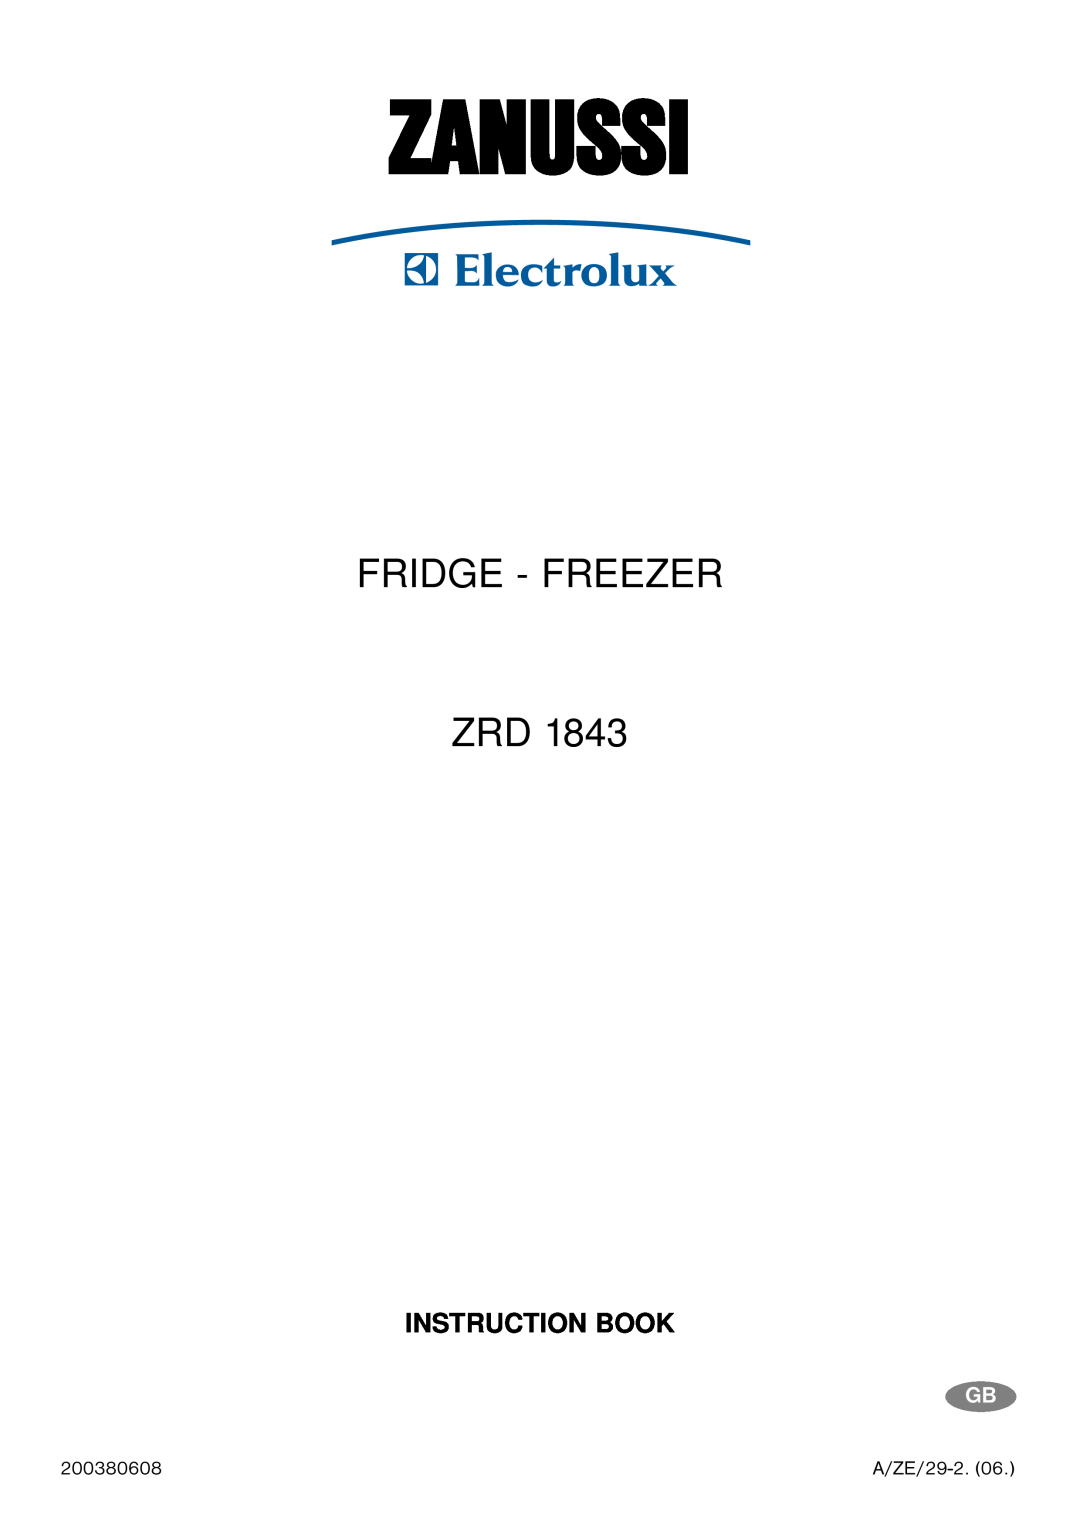 Zanussi ZRD 1843 manual Zanussi, Fridge - Freezer Zrd, Instruction Book 